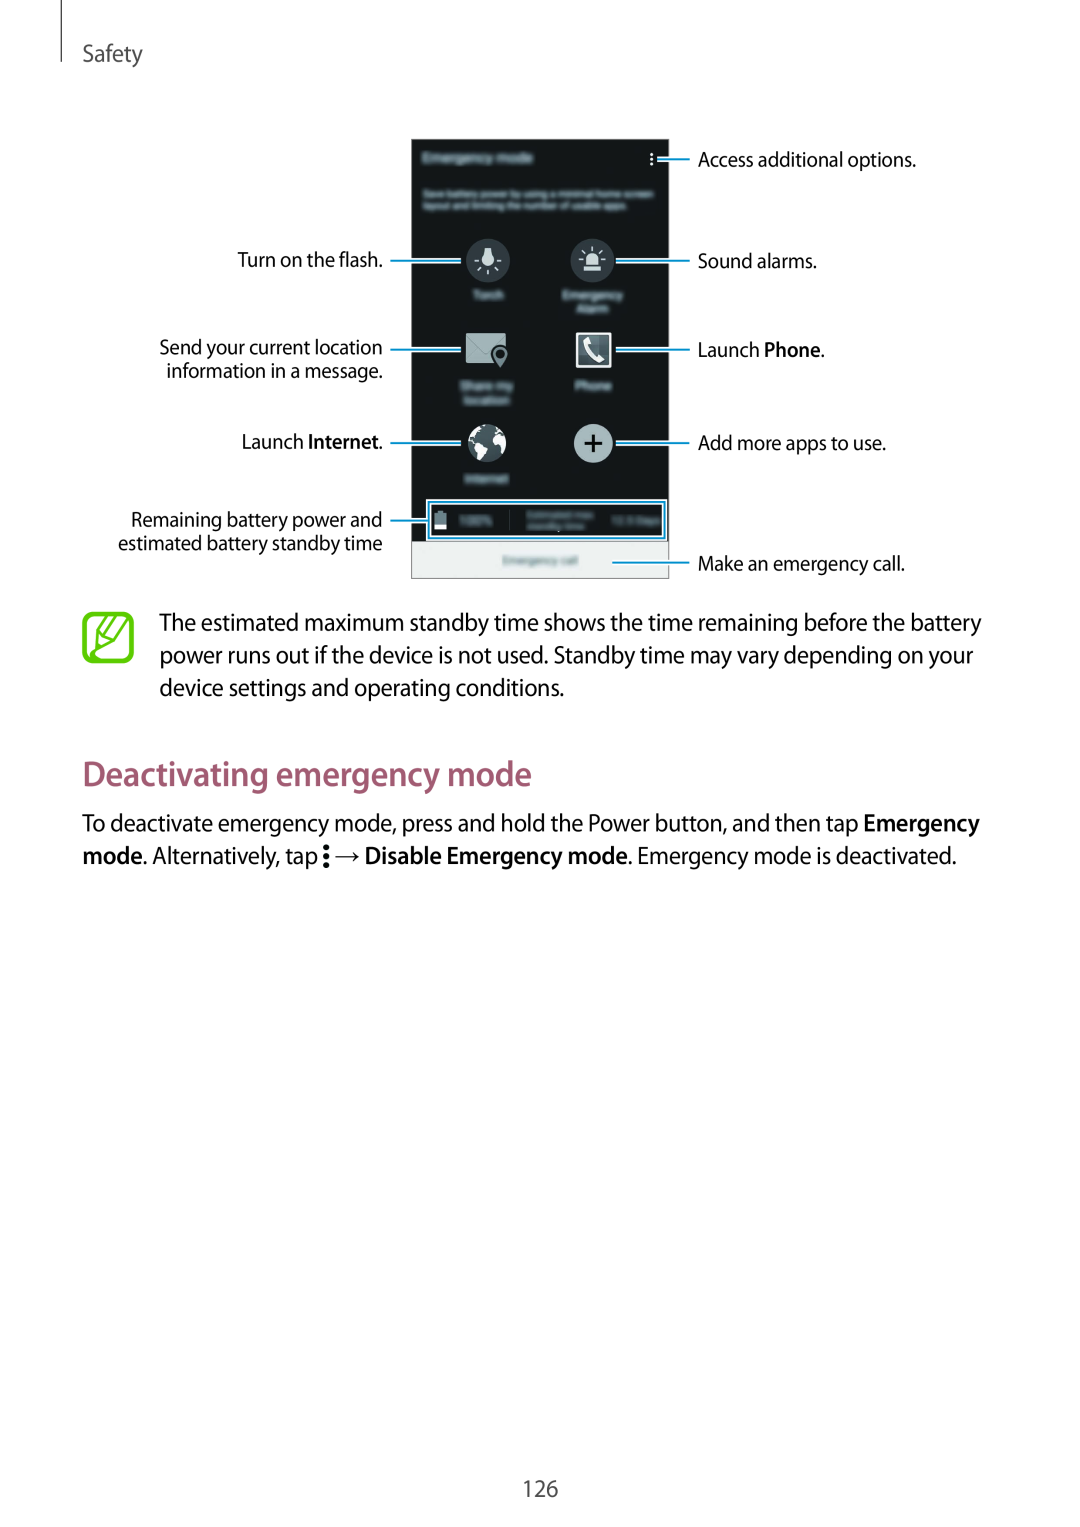 Samsung SM-G901FZBABAL, SM-G901FZKACOS, SM-G901FZDABAL, SM-G901FZWAVGR, SM-G901FZWADBT Deactivating emergency mode, Safety 